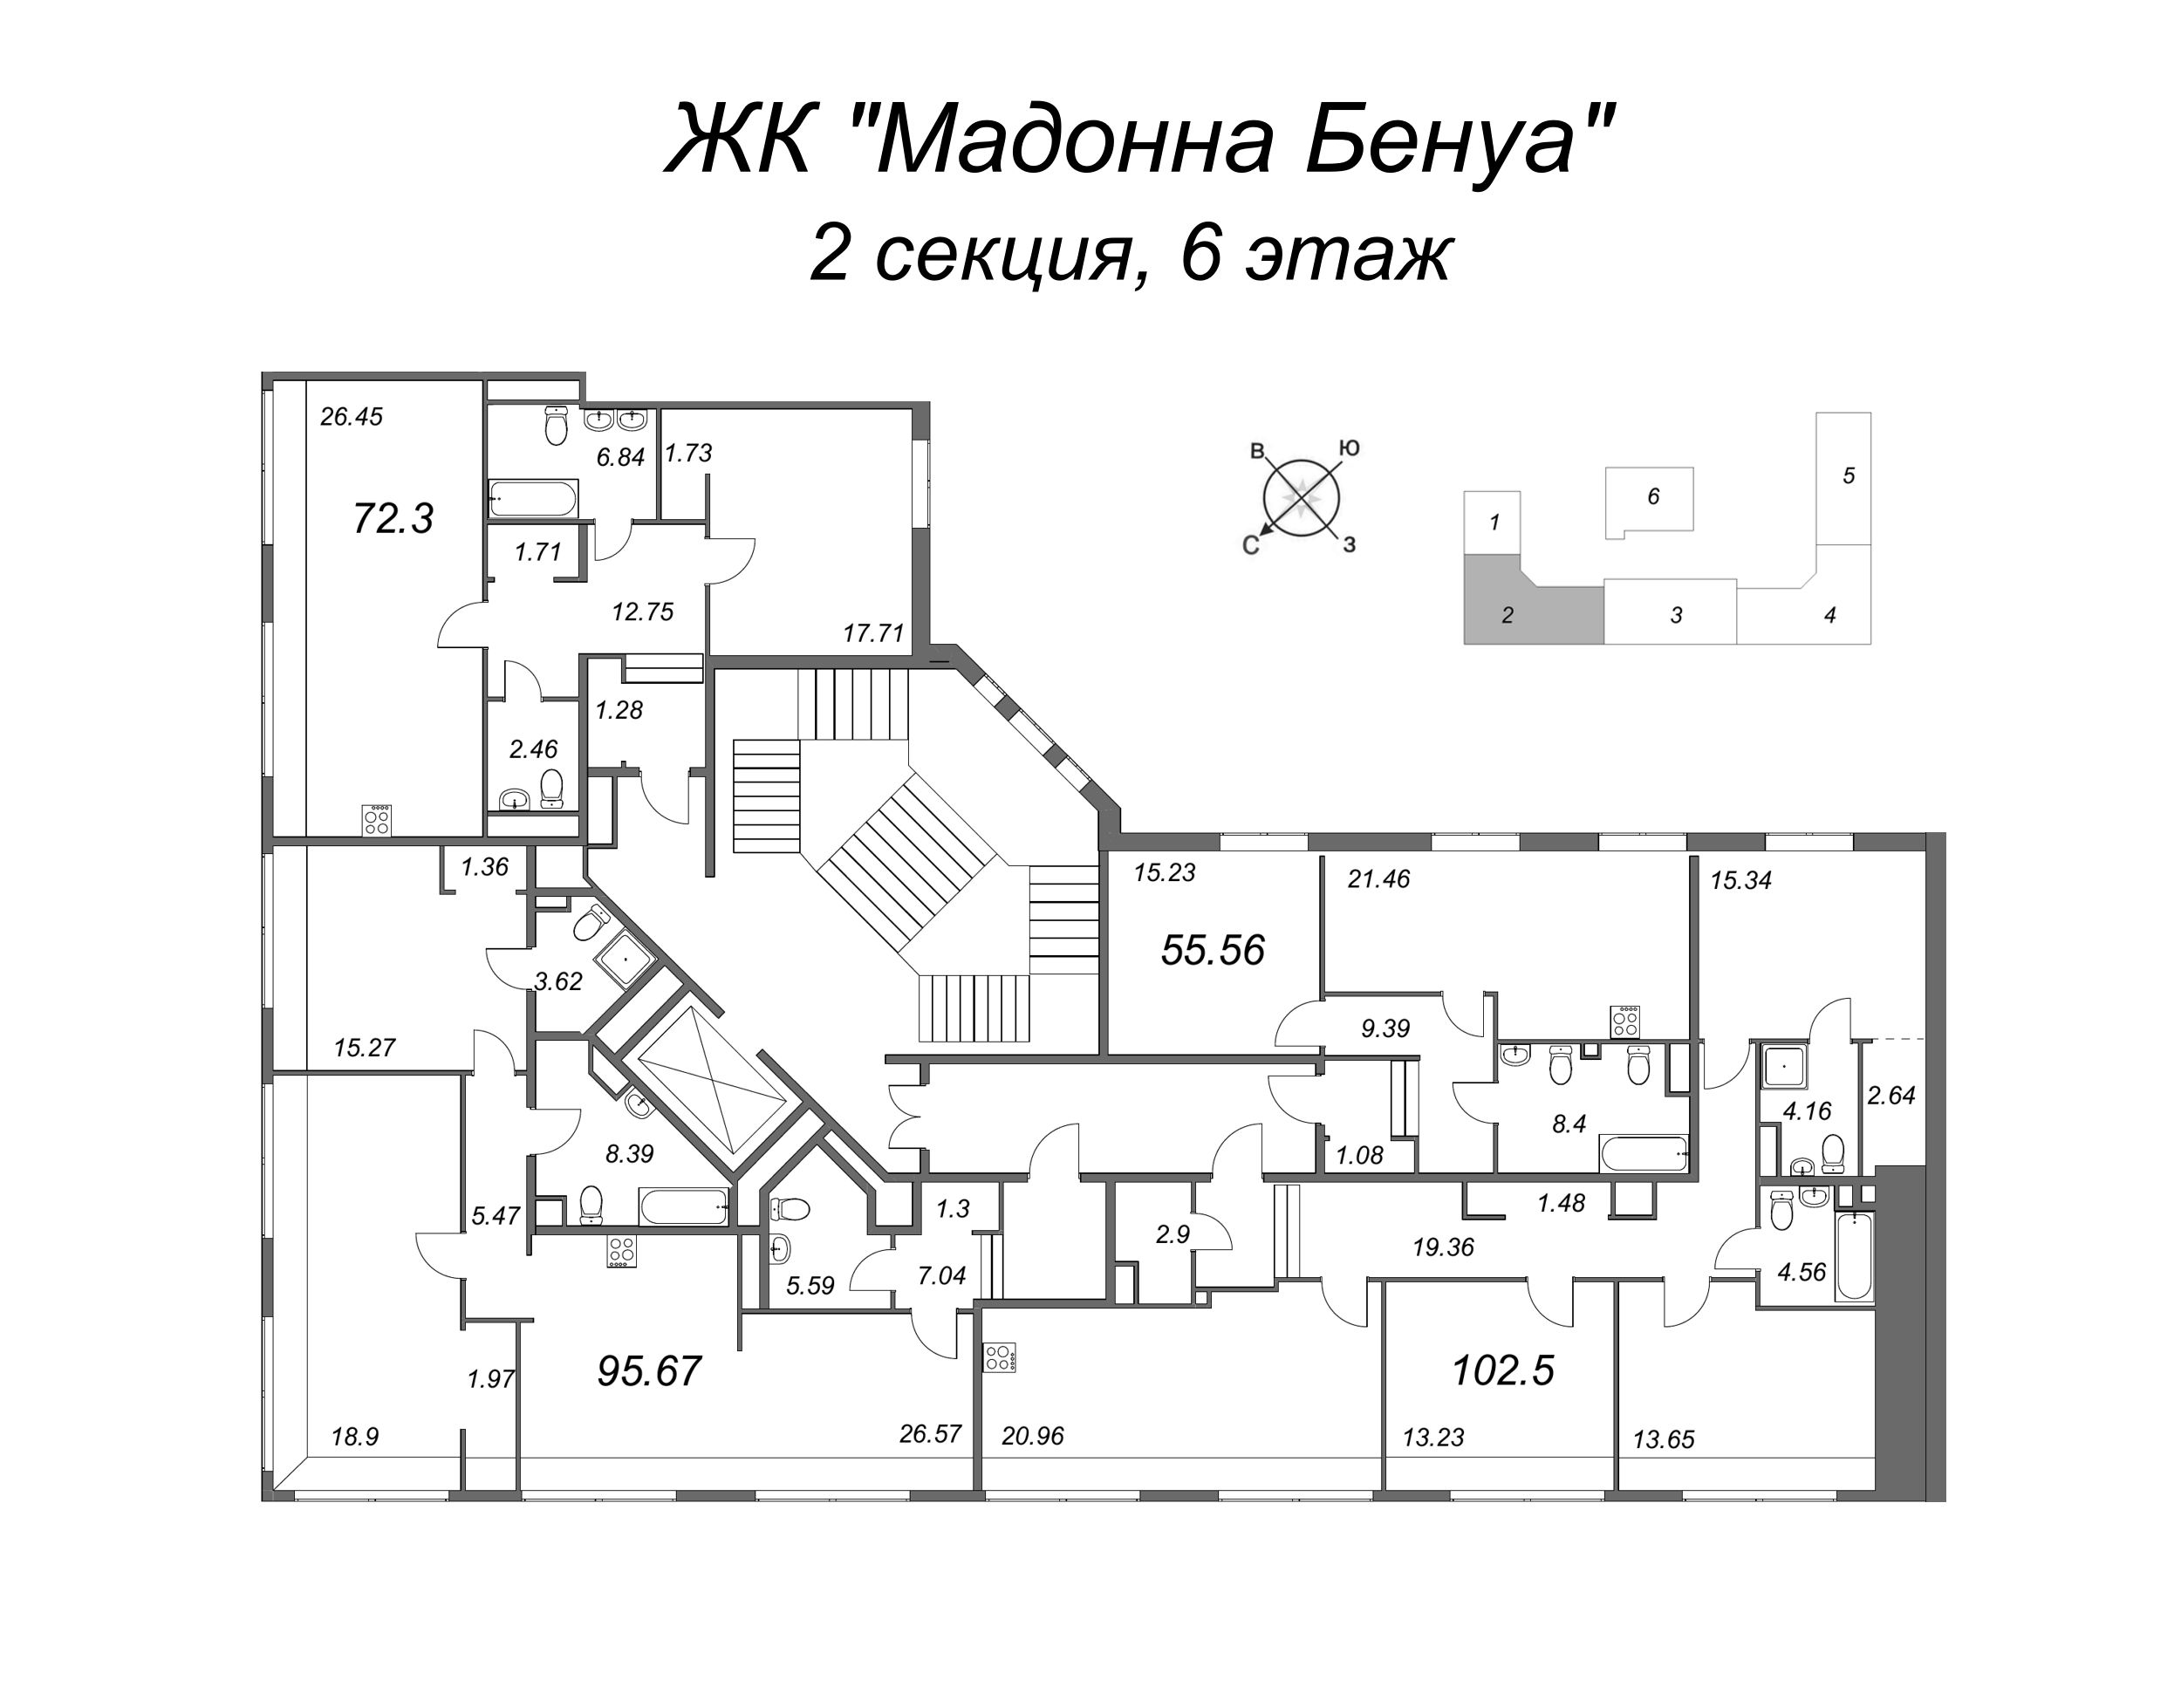 2-комнатная (Евро) квартира, 73.9 м² - планировка этажа